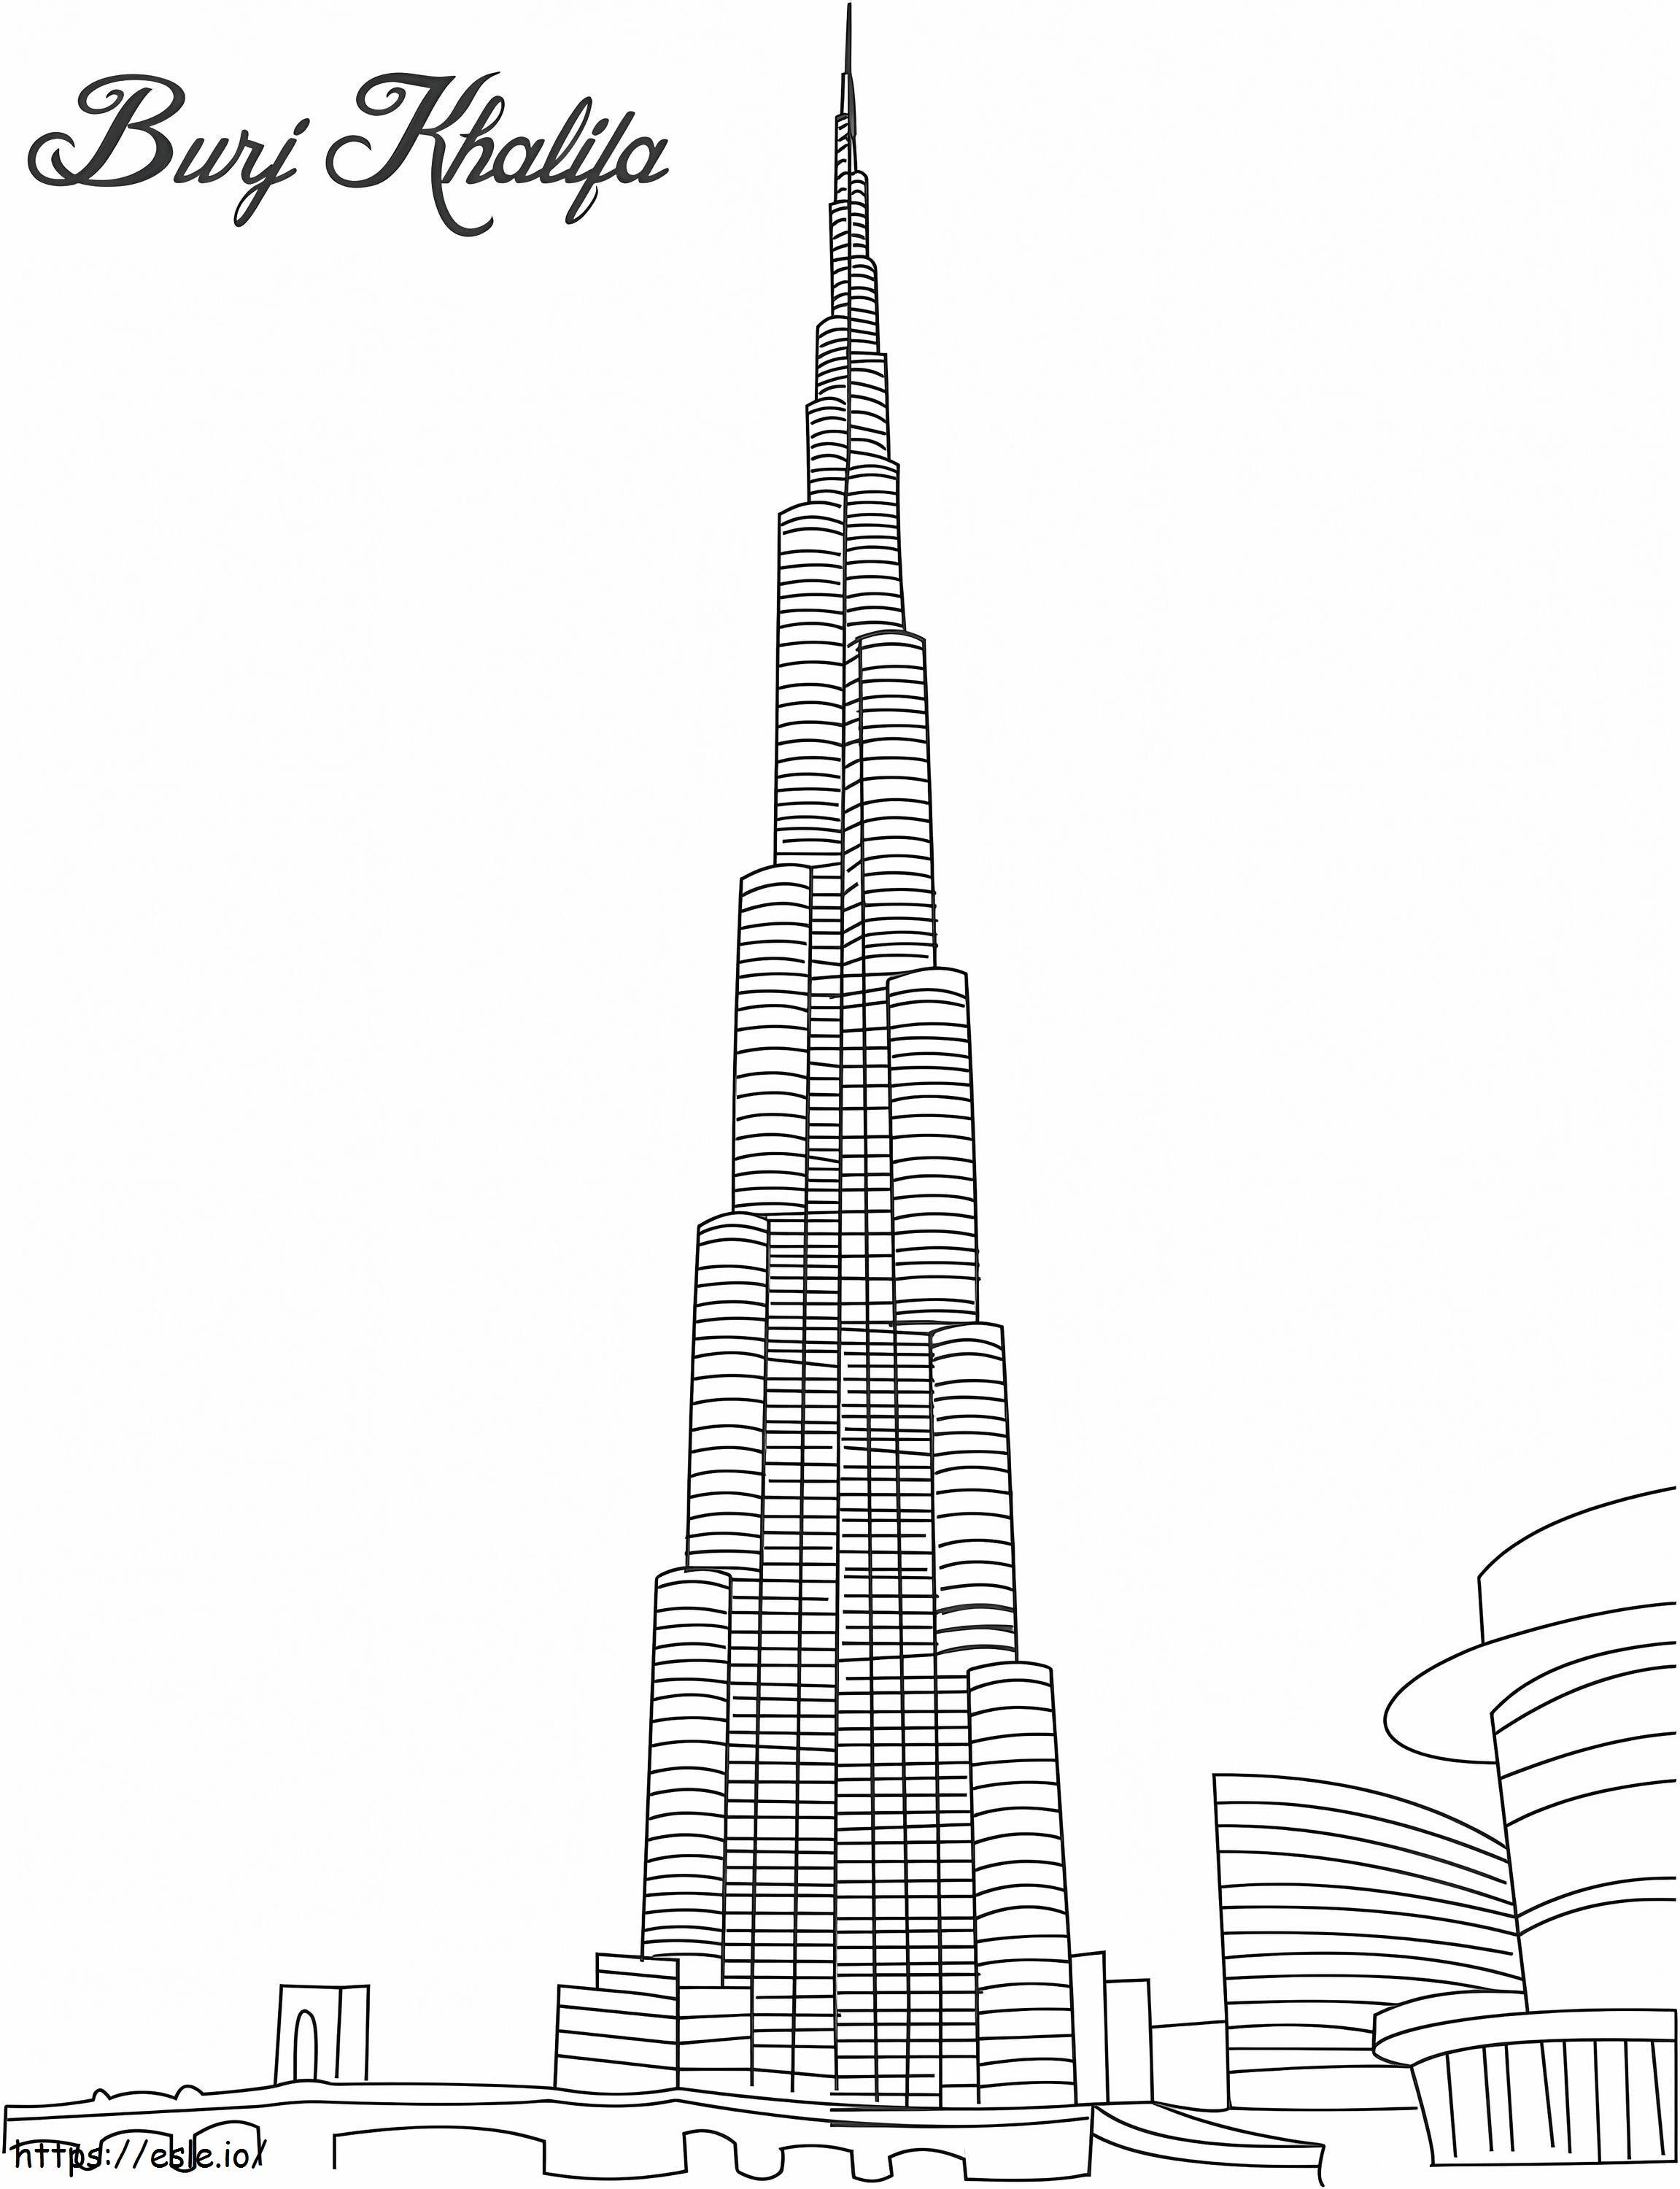 1526980175 3350 29310 Burj Khalifa ausmalbilder